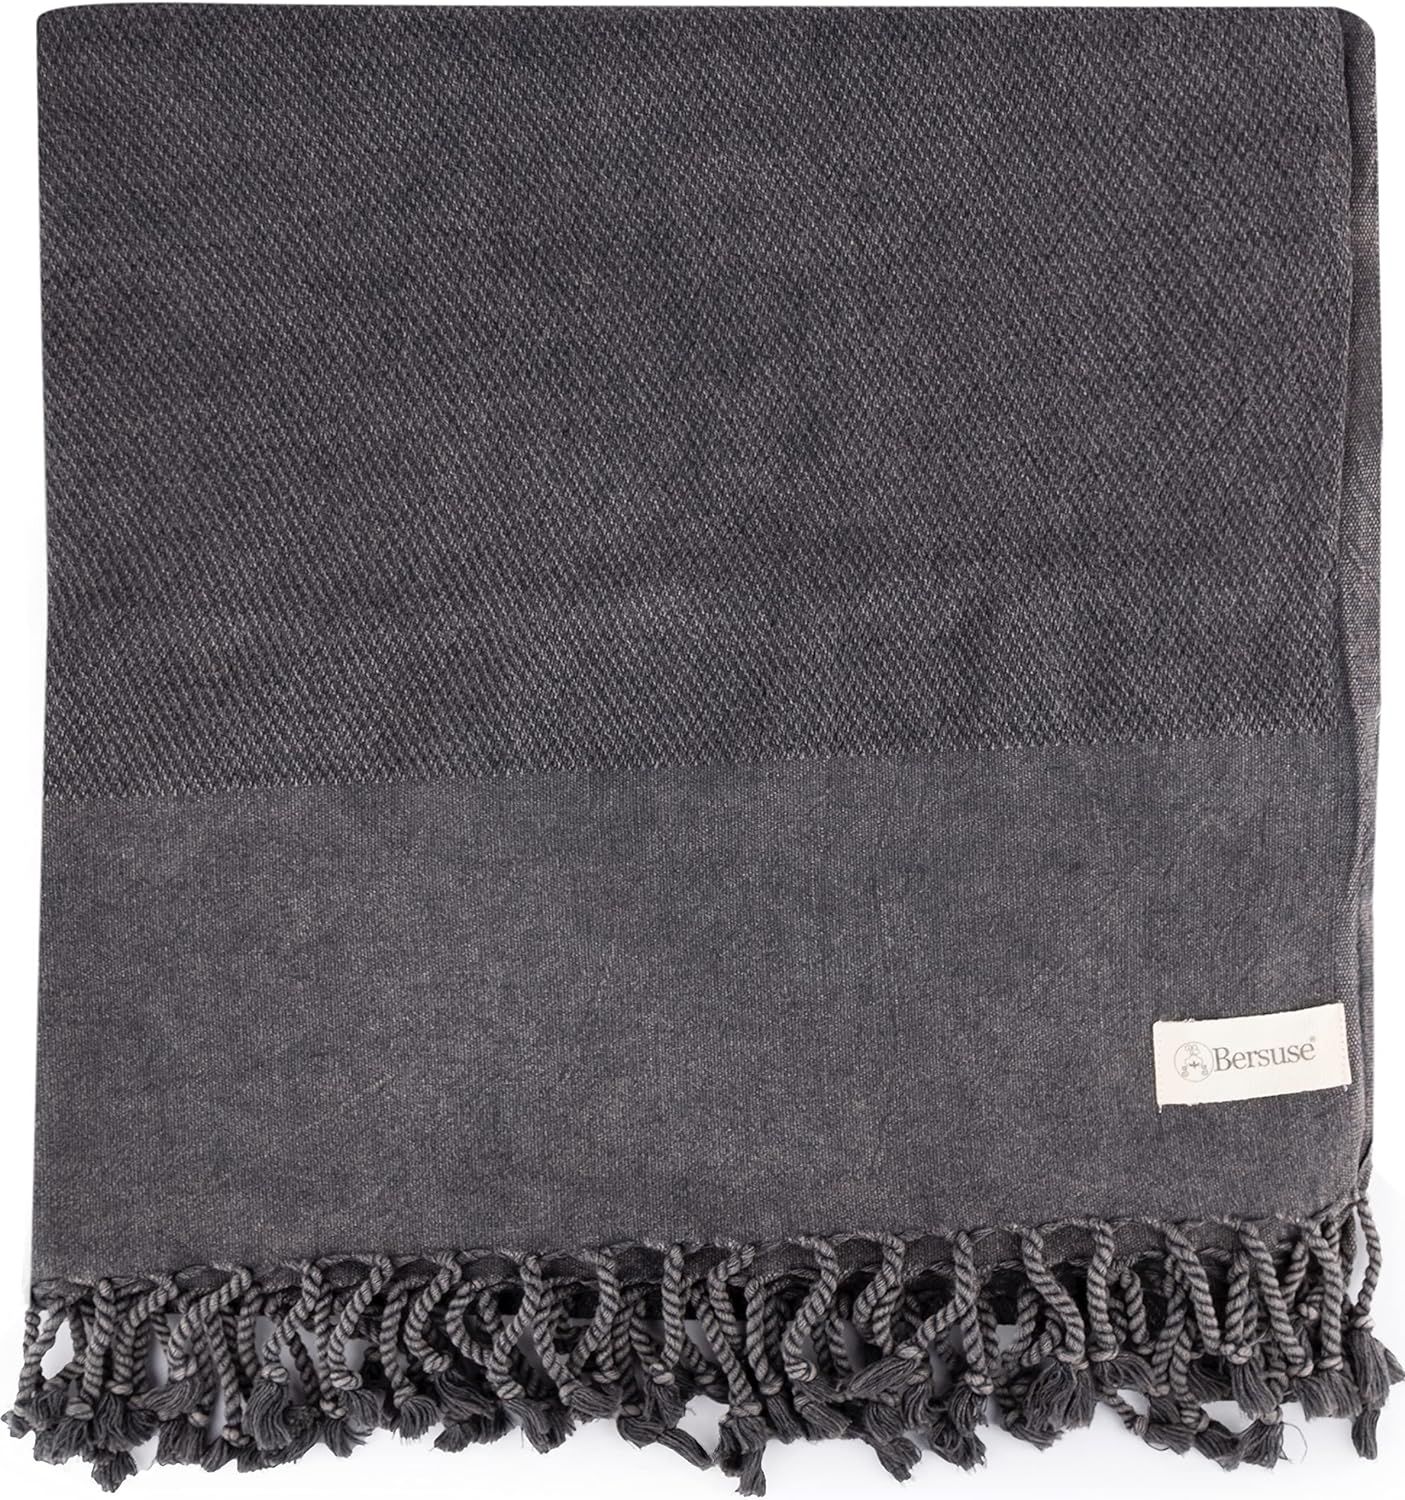 Bersuse 100% Cotton Zuma Stonewashed Turkish Towel - 33x66 Inches, Black | Amazon (US)